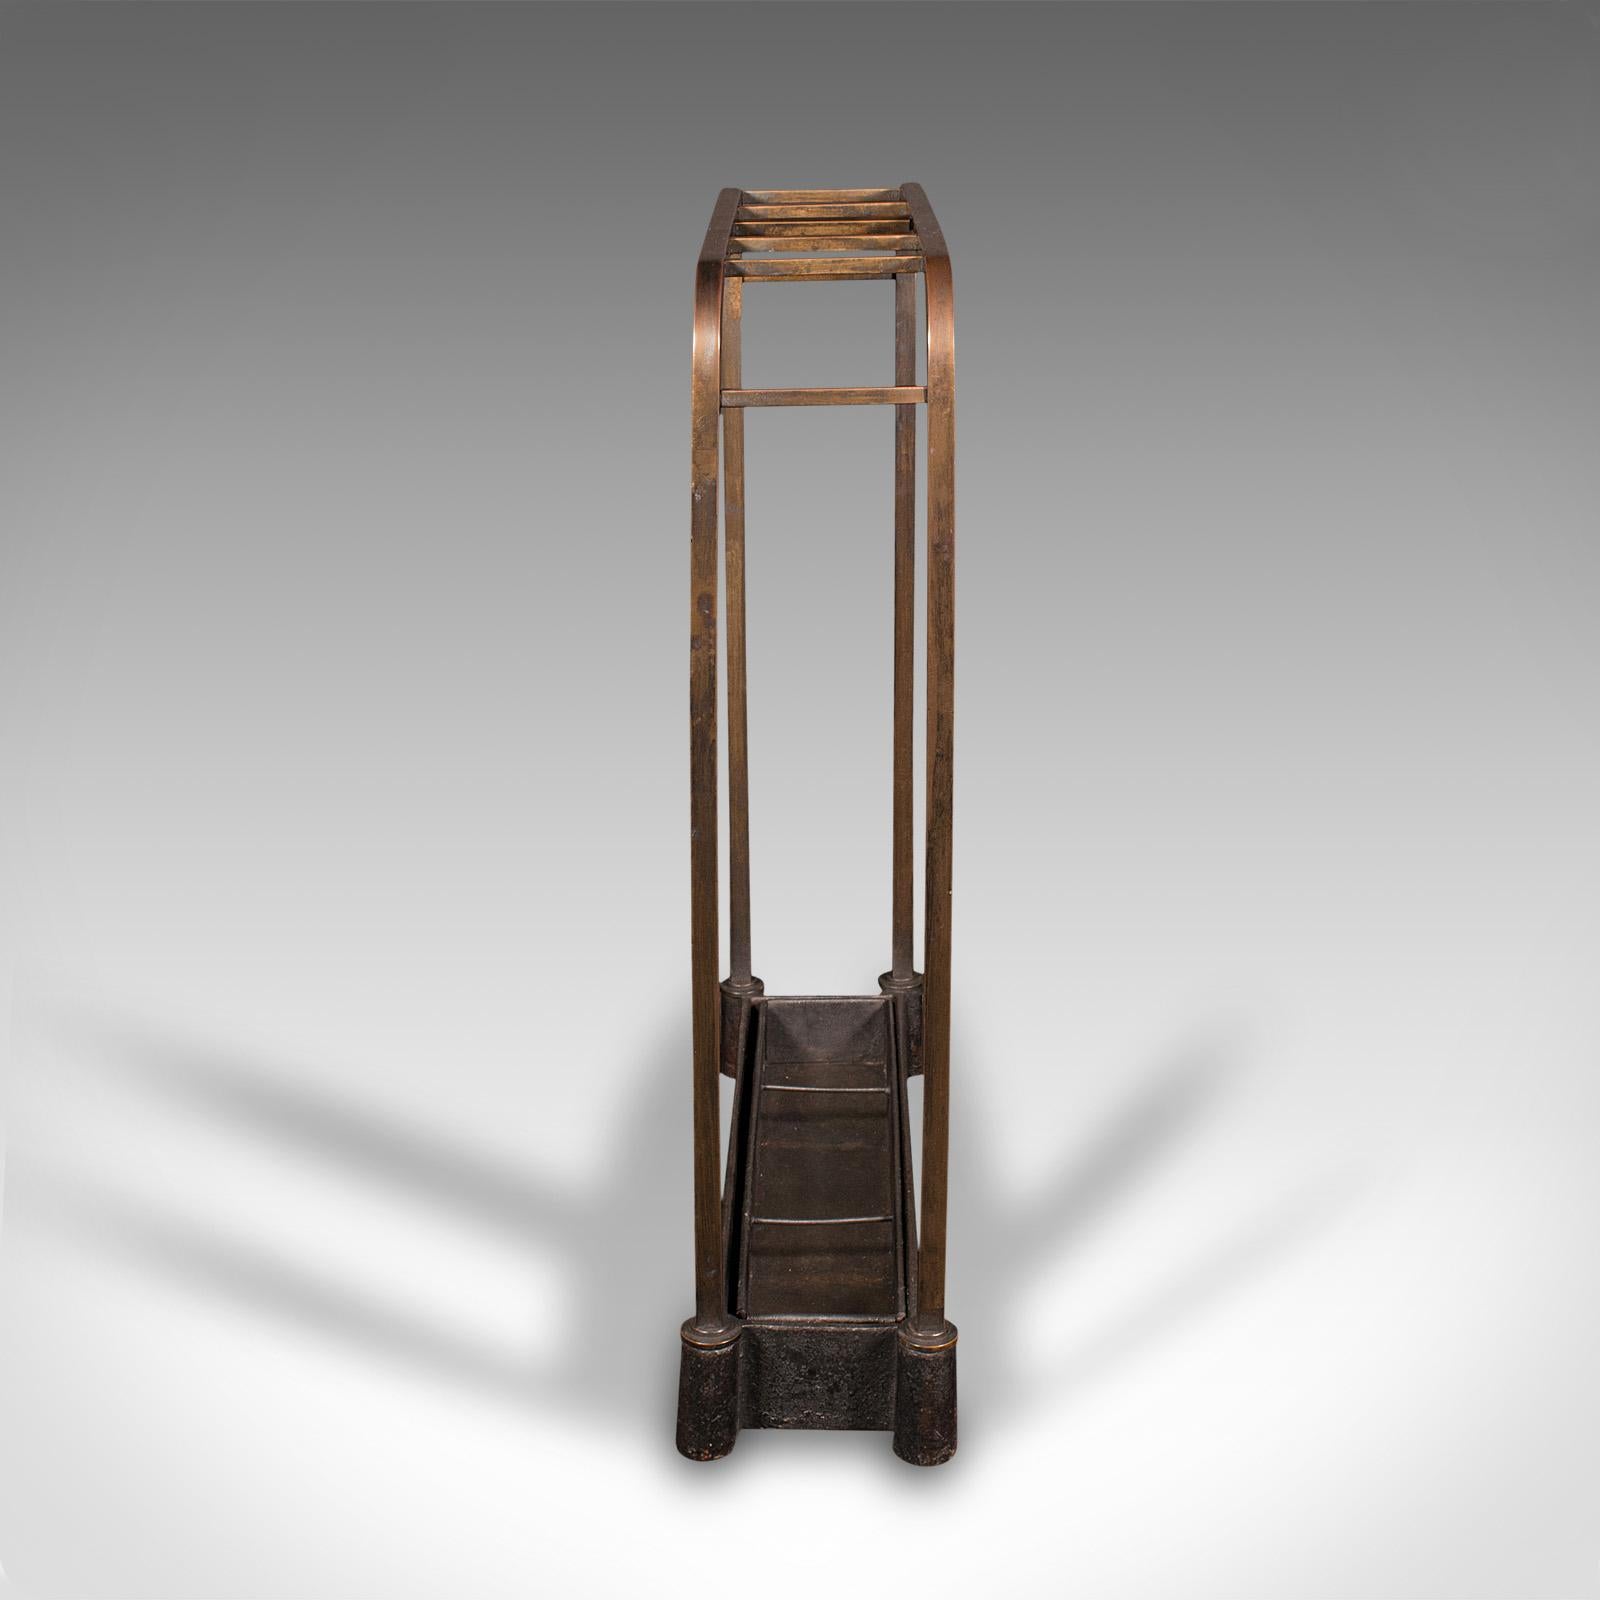 Late Victorian Antique Segmented Stick Stand, English, Brass, Umbrella Rack, Hallway, Victorian